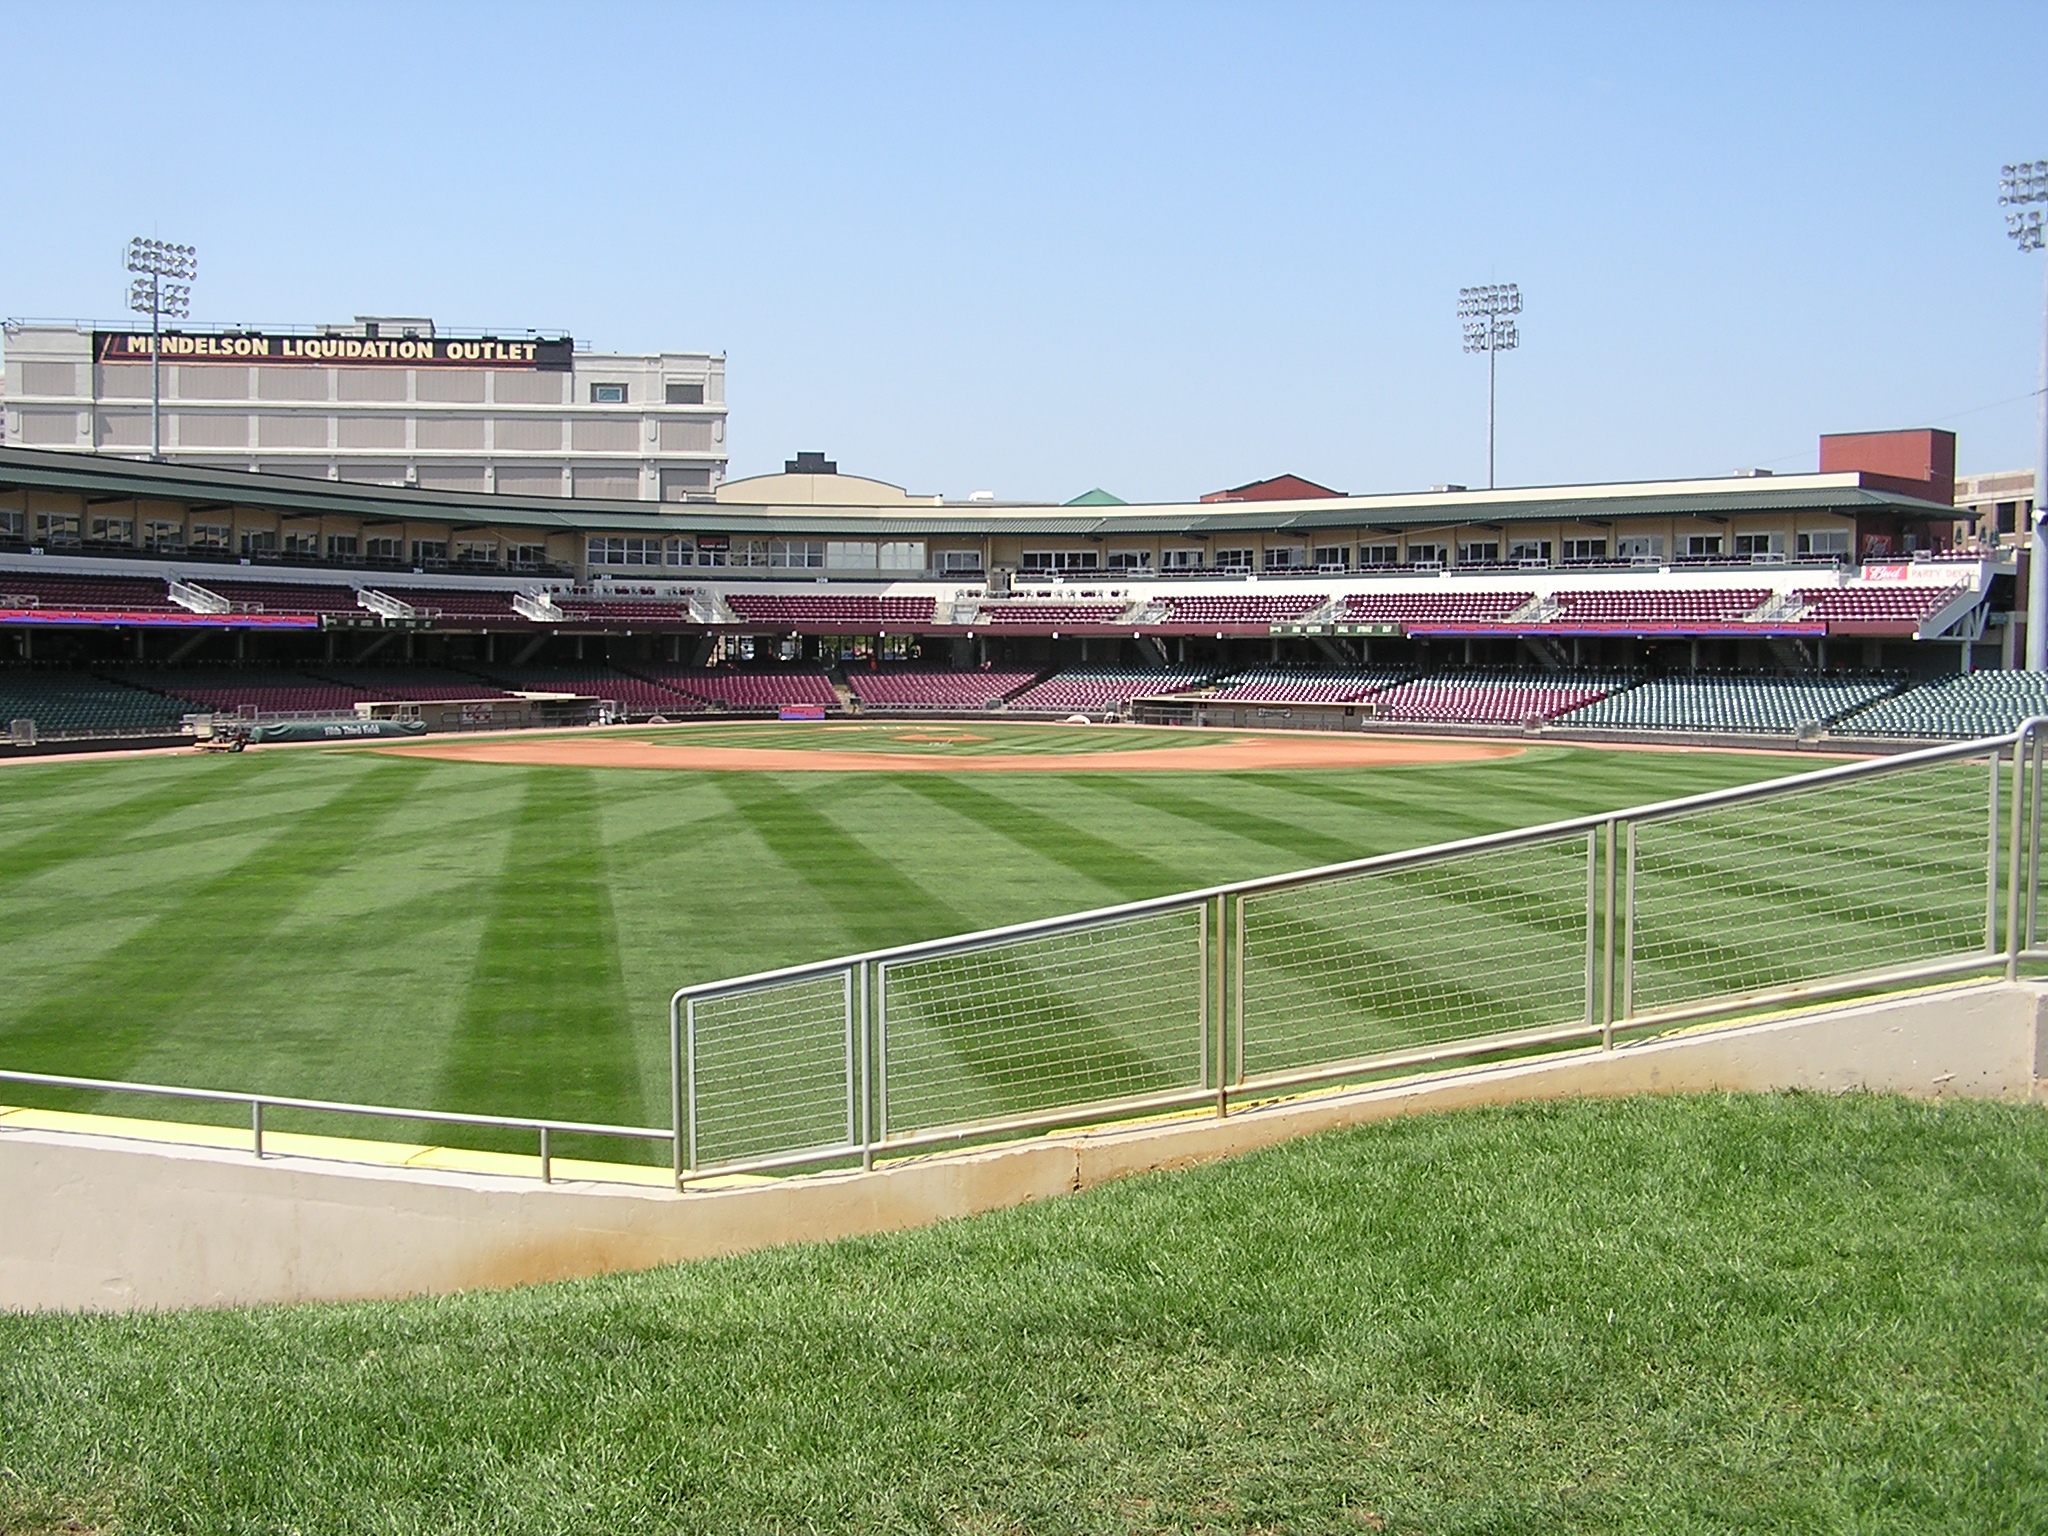 A beautiful ballpark in Dayton, Ohio